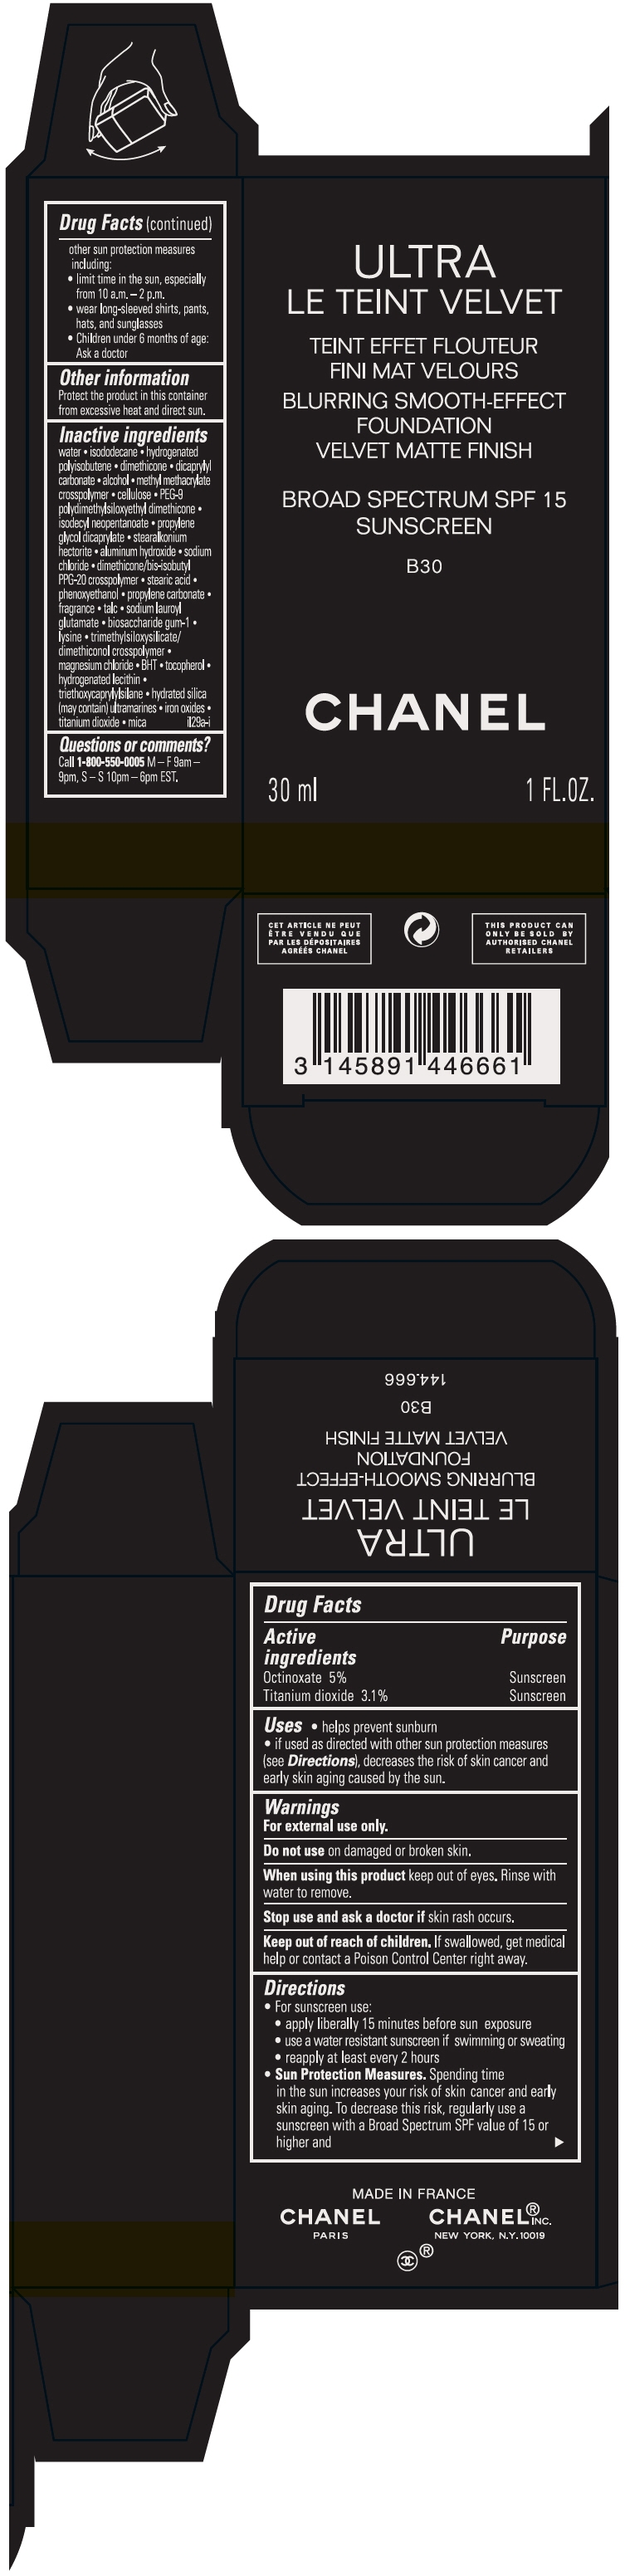 PRINCIPAL DISPLAY PANEL - 30 ml Bottle Carton - B30